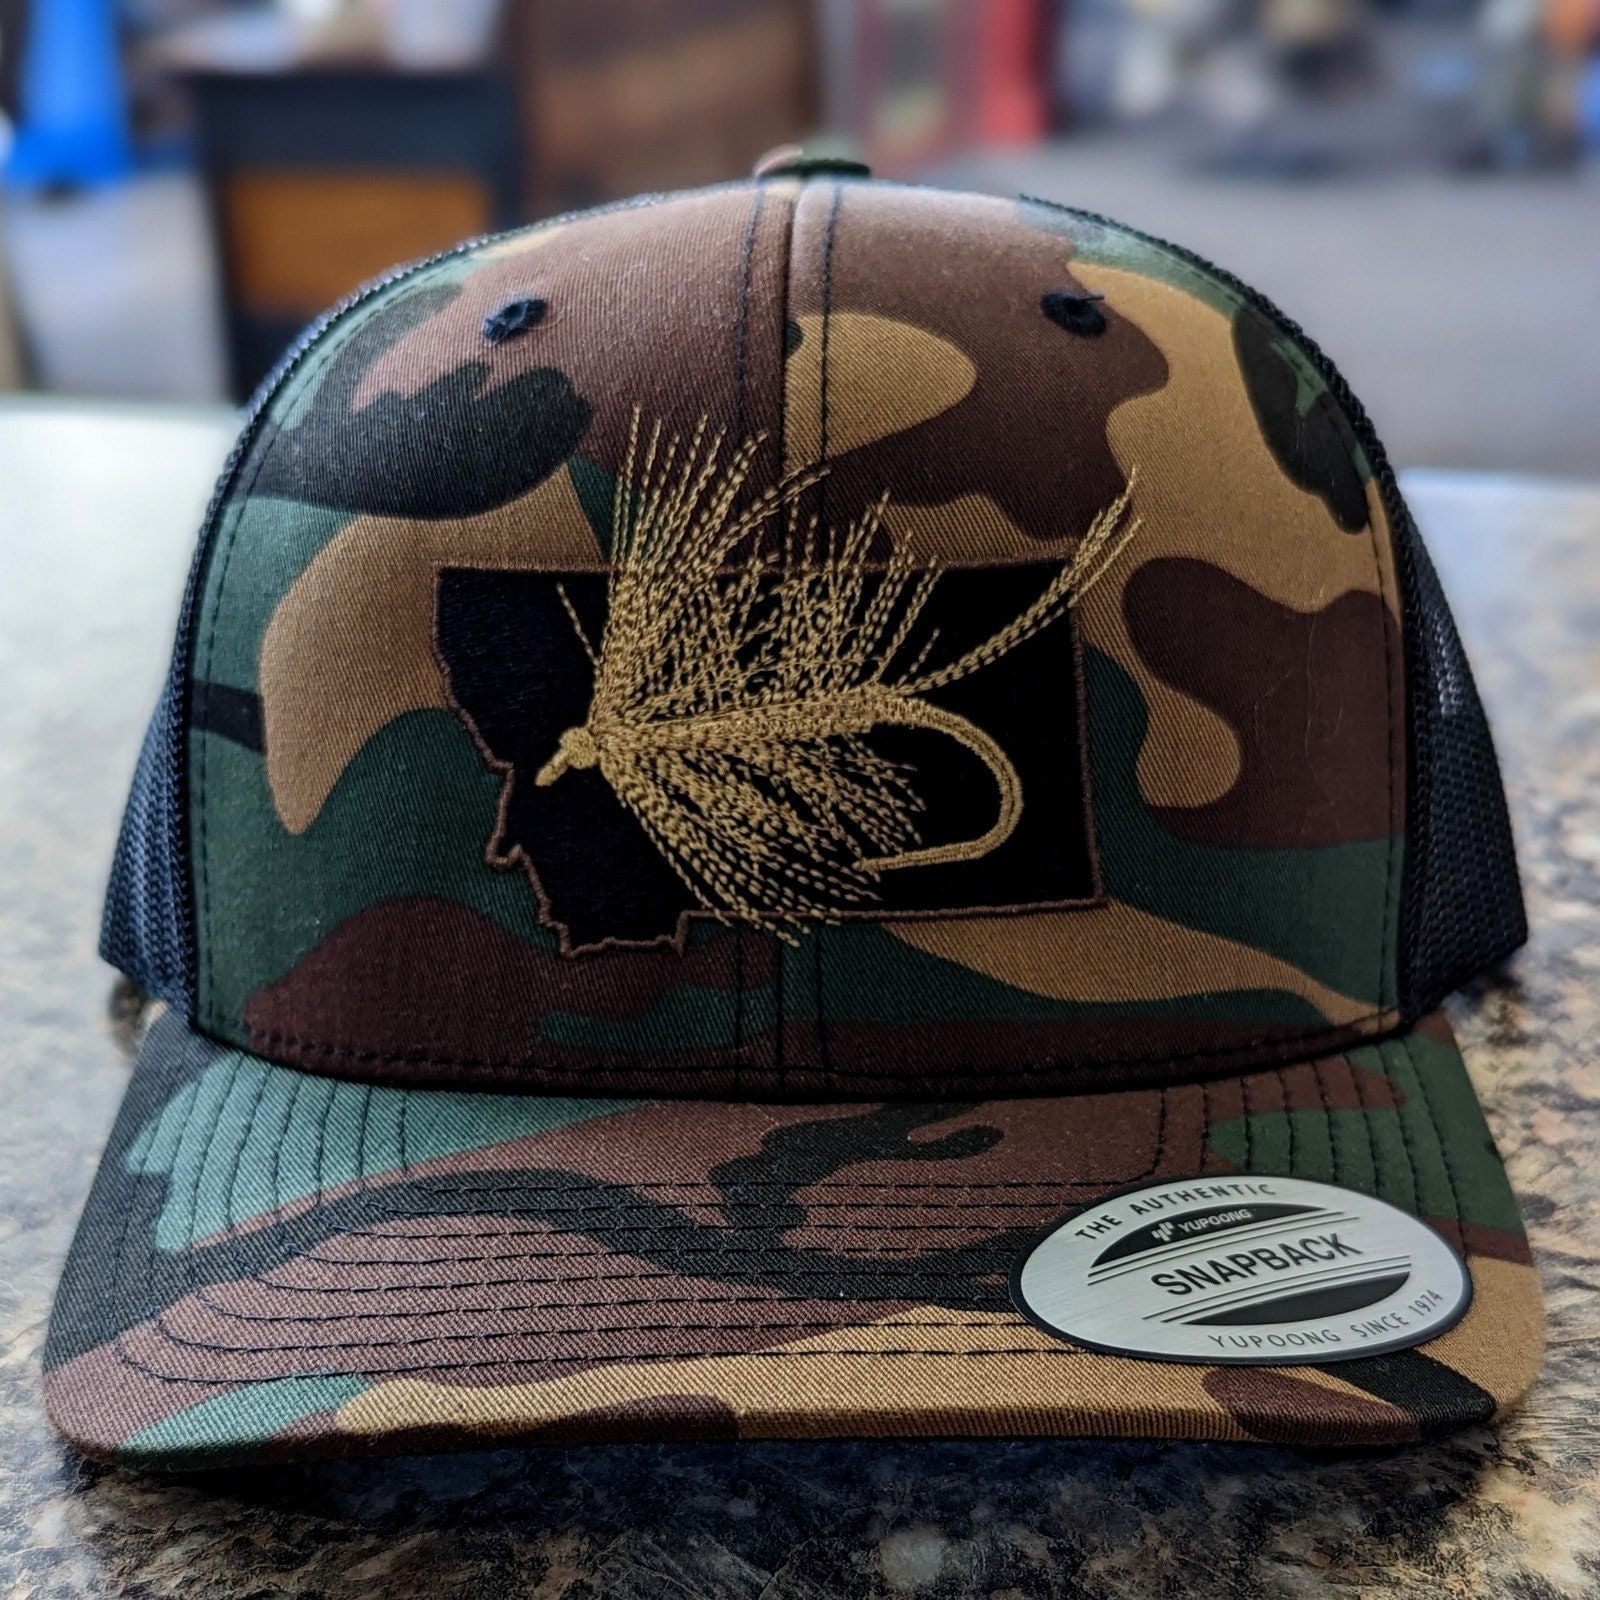 Simms x Montana Wild Trout Trucker - Fly Fishing Maniac Hat